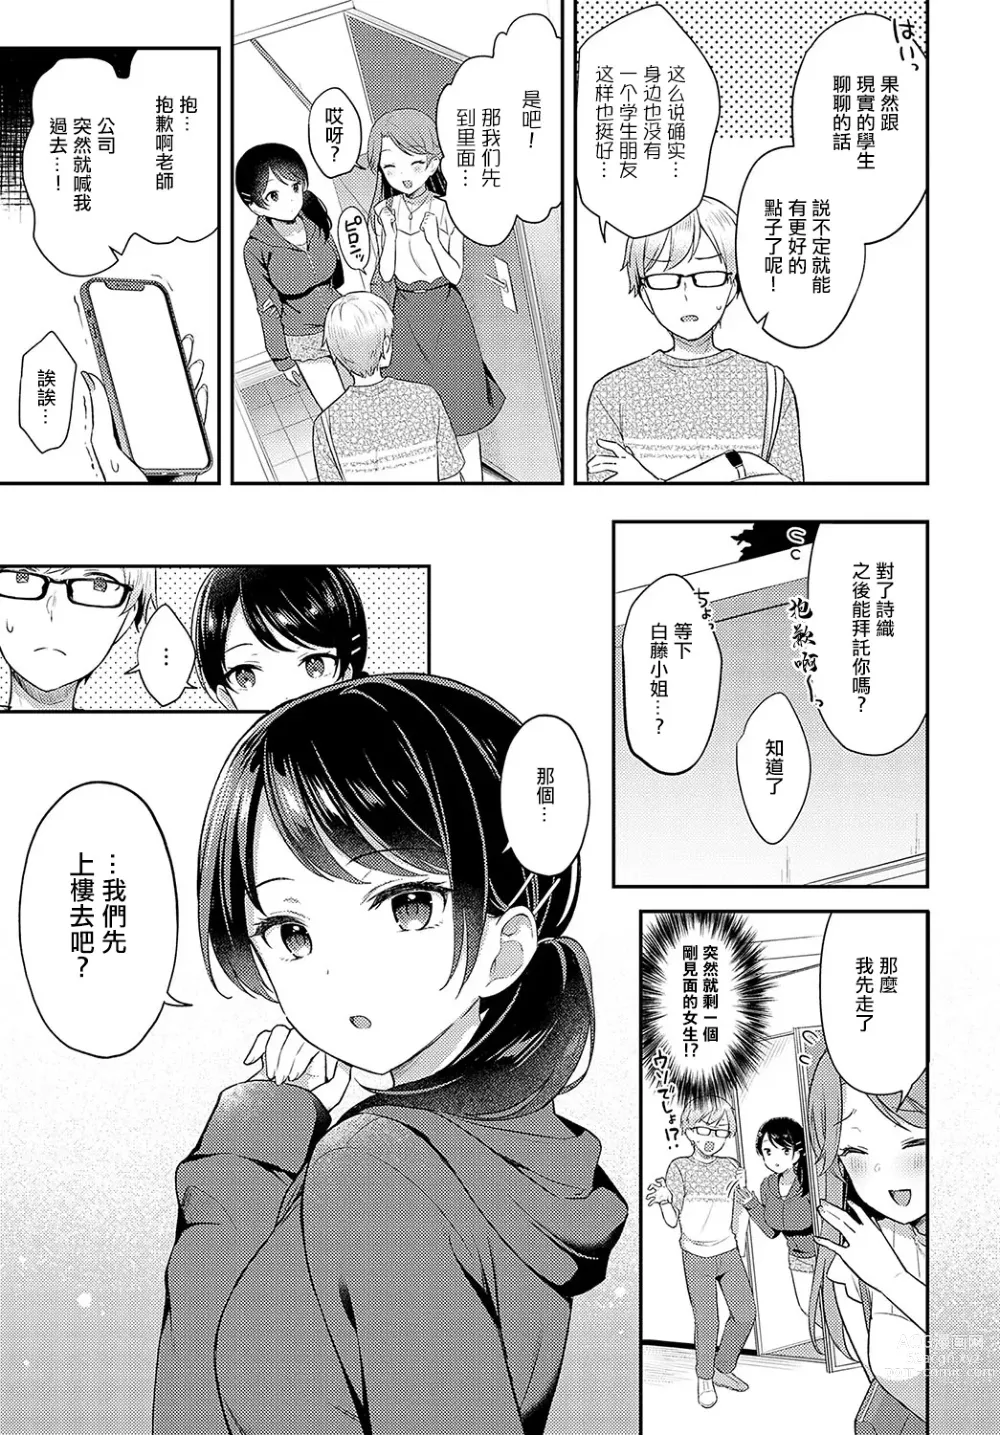 Page 2 of manga Han-imo x Youthful